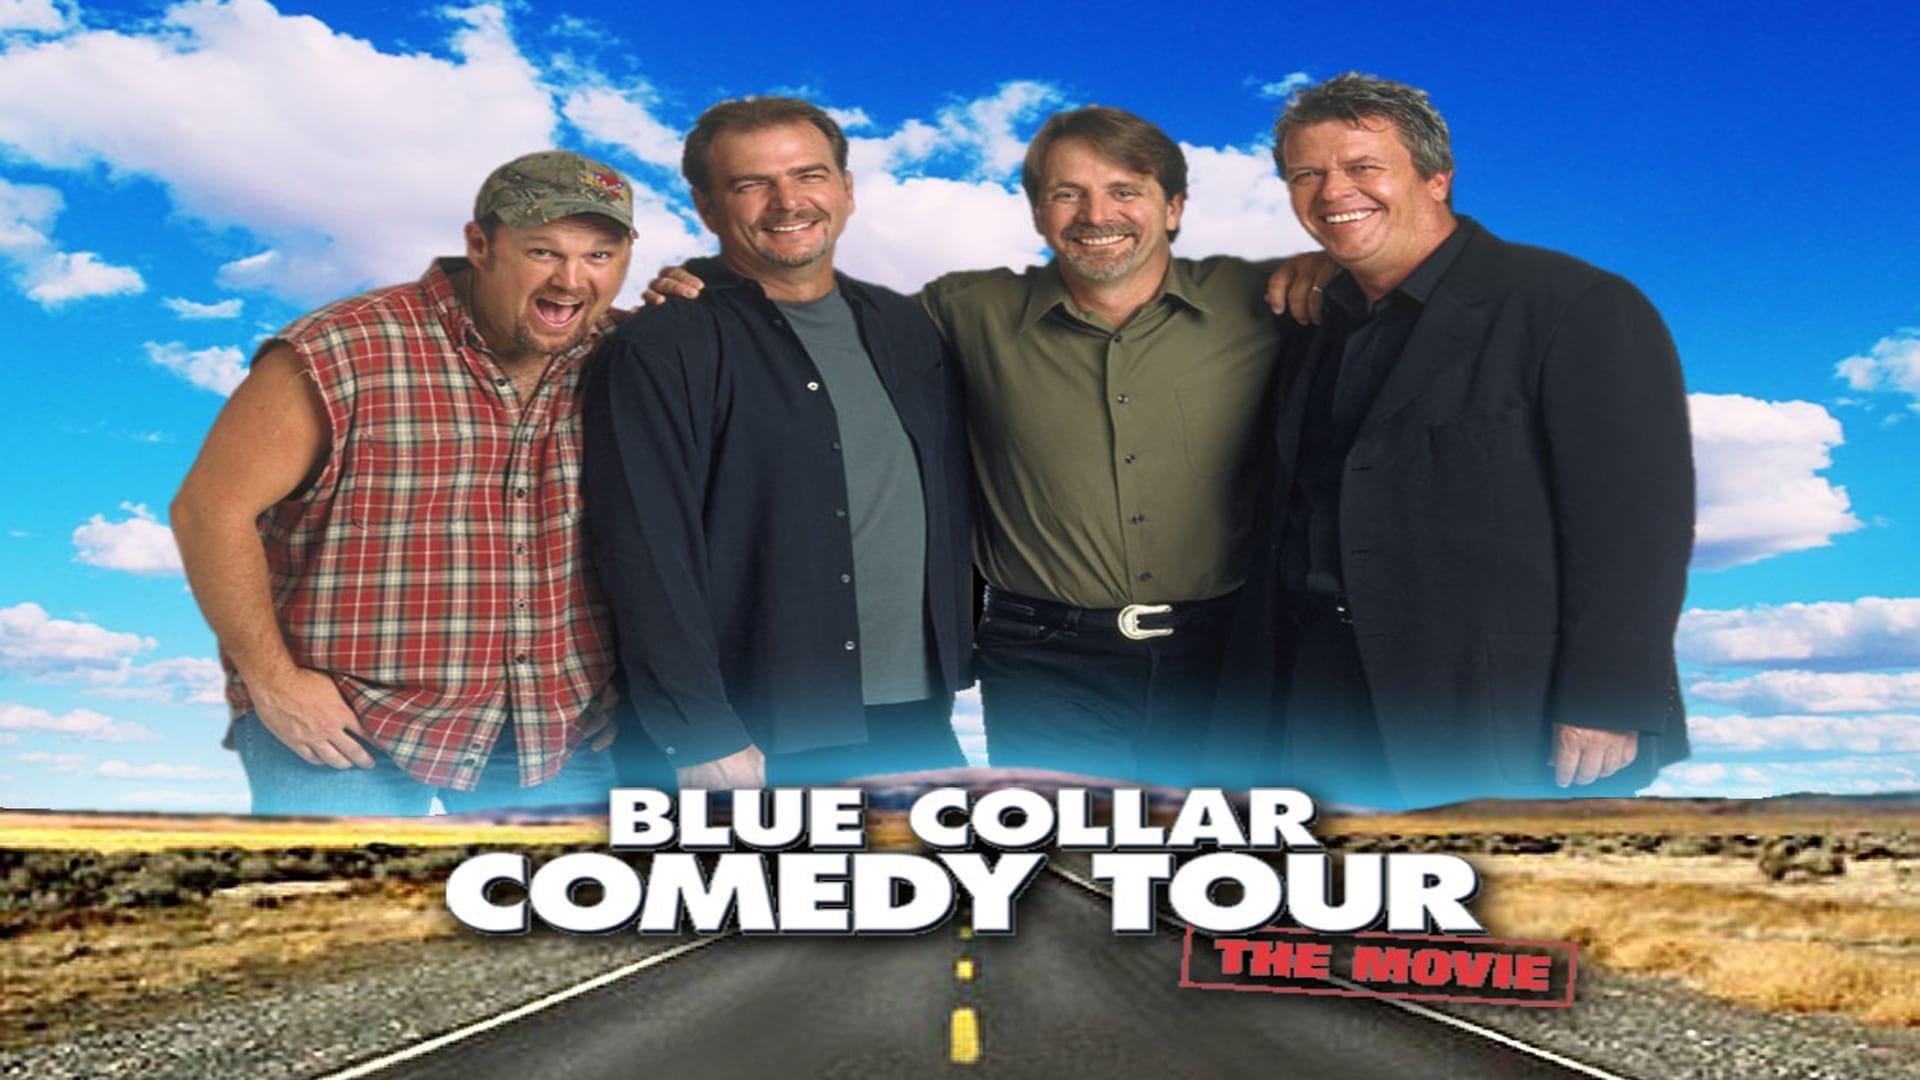 Blue Collar Comedy Tour: The Movie backdrop